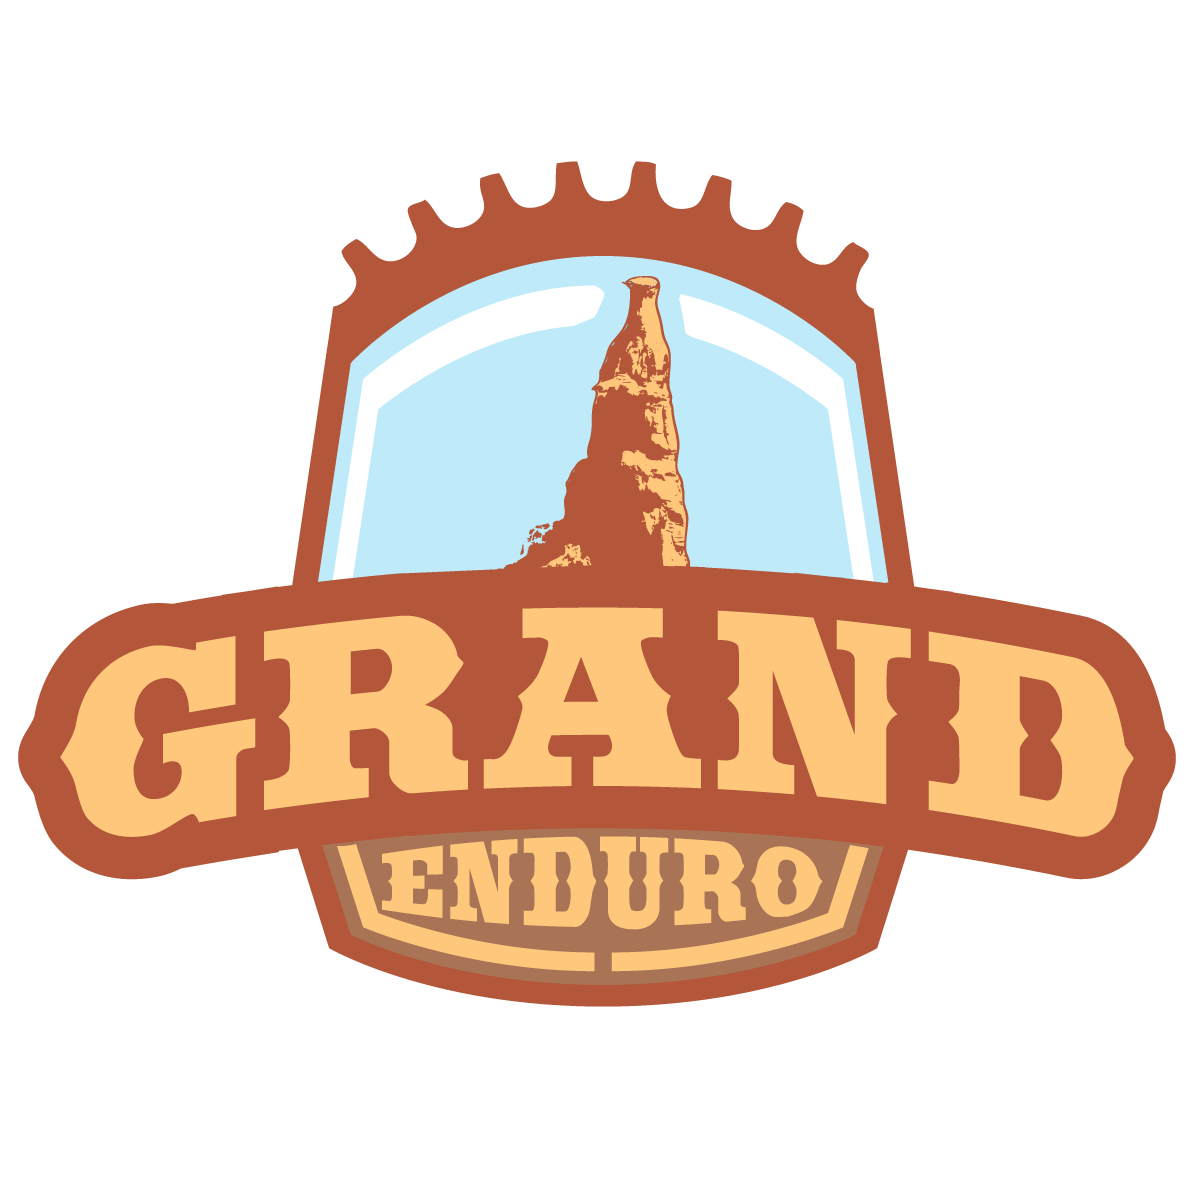 GRAND_ENDURO_LOGO_REFORMATTED.png